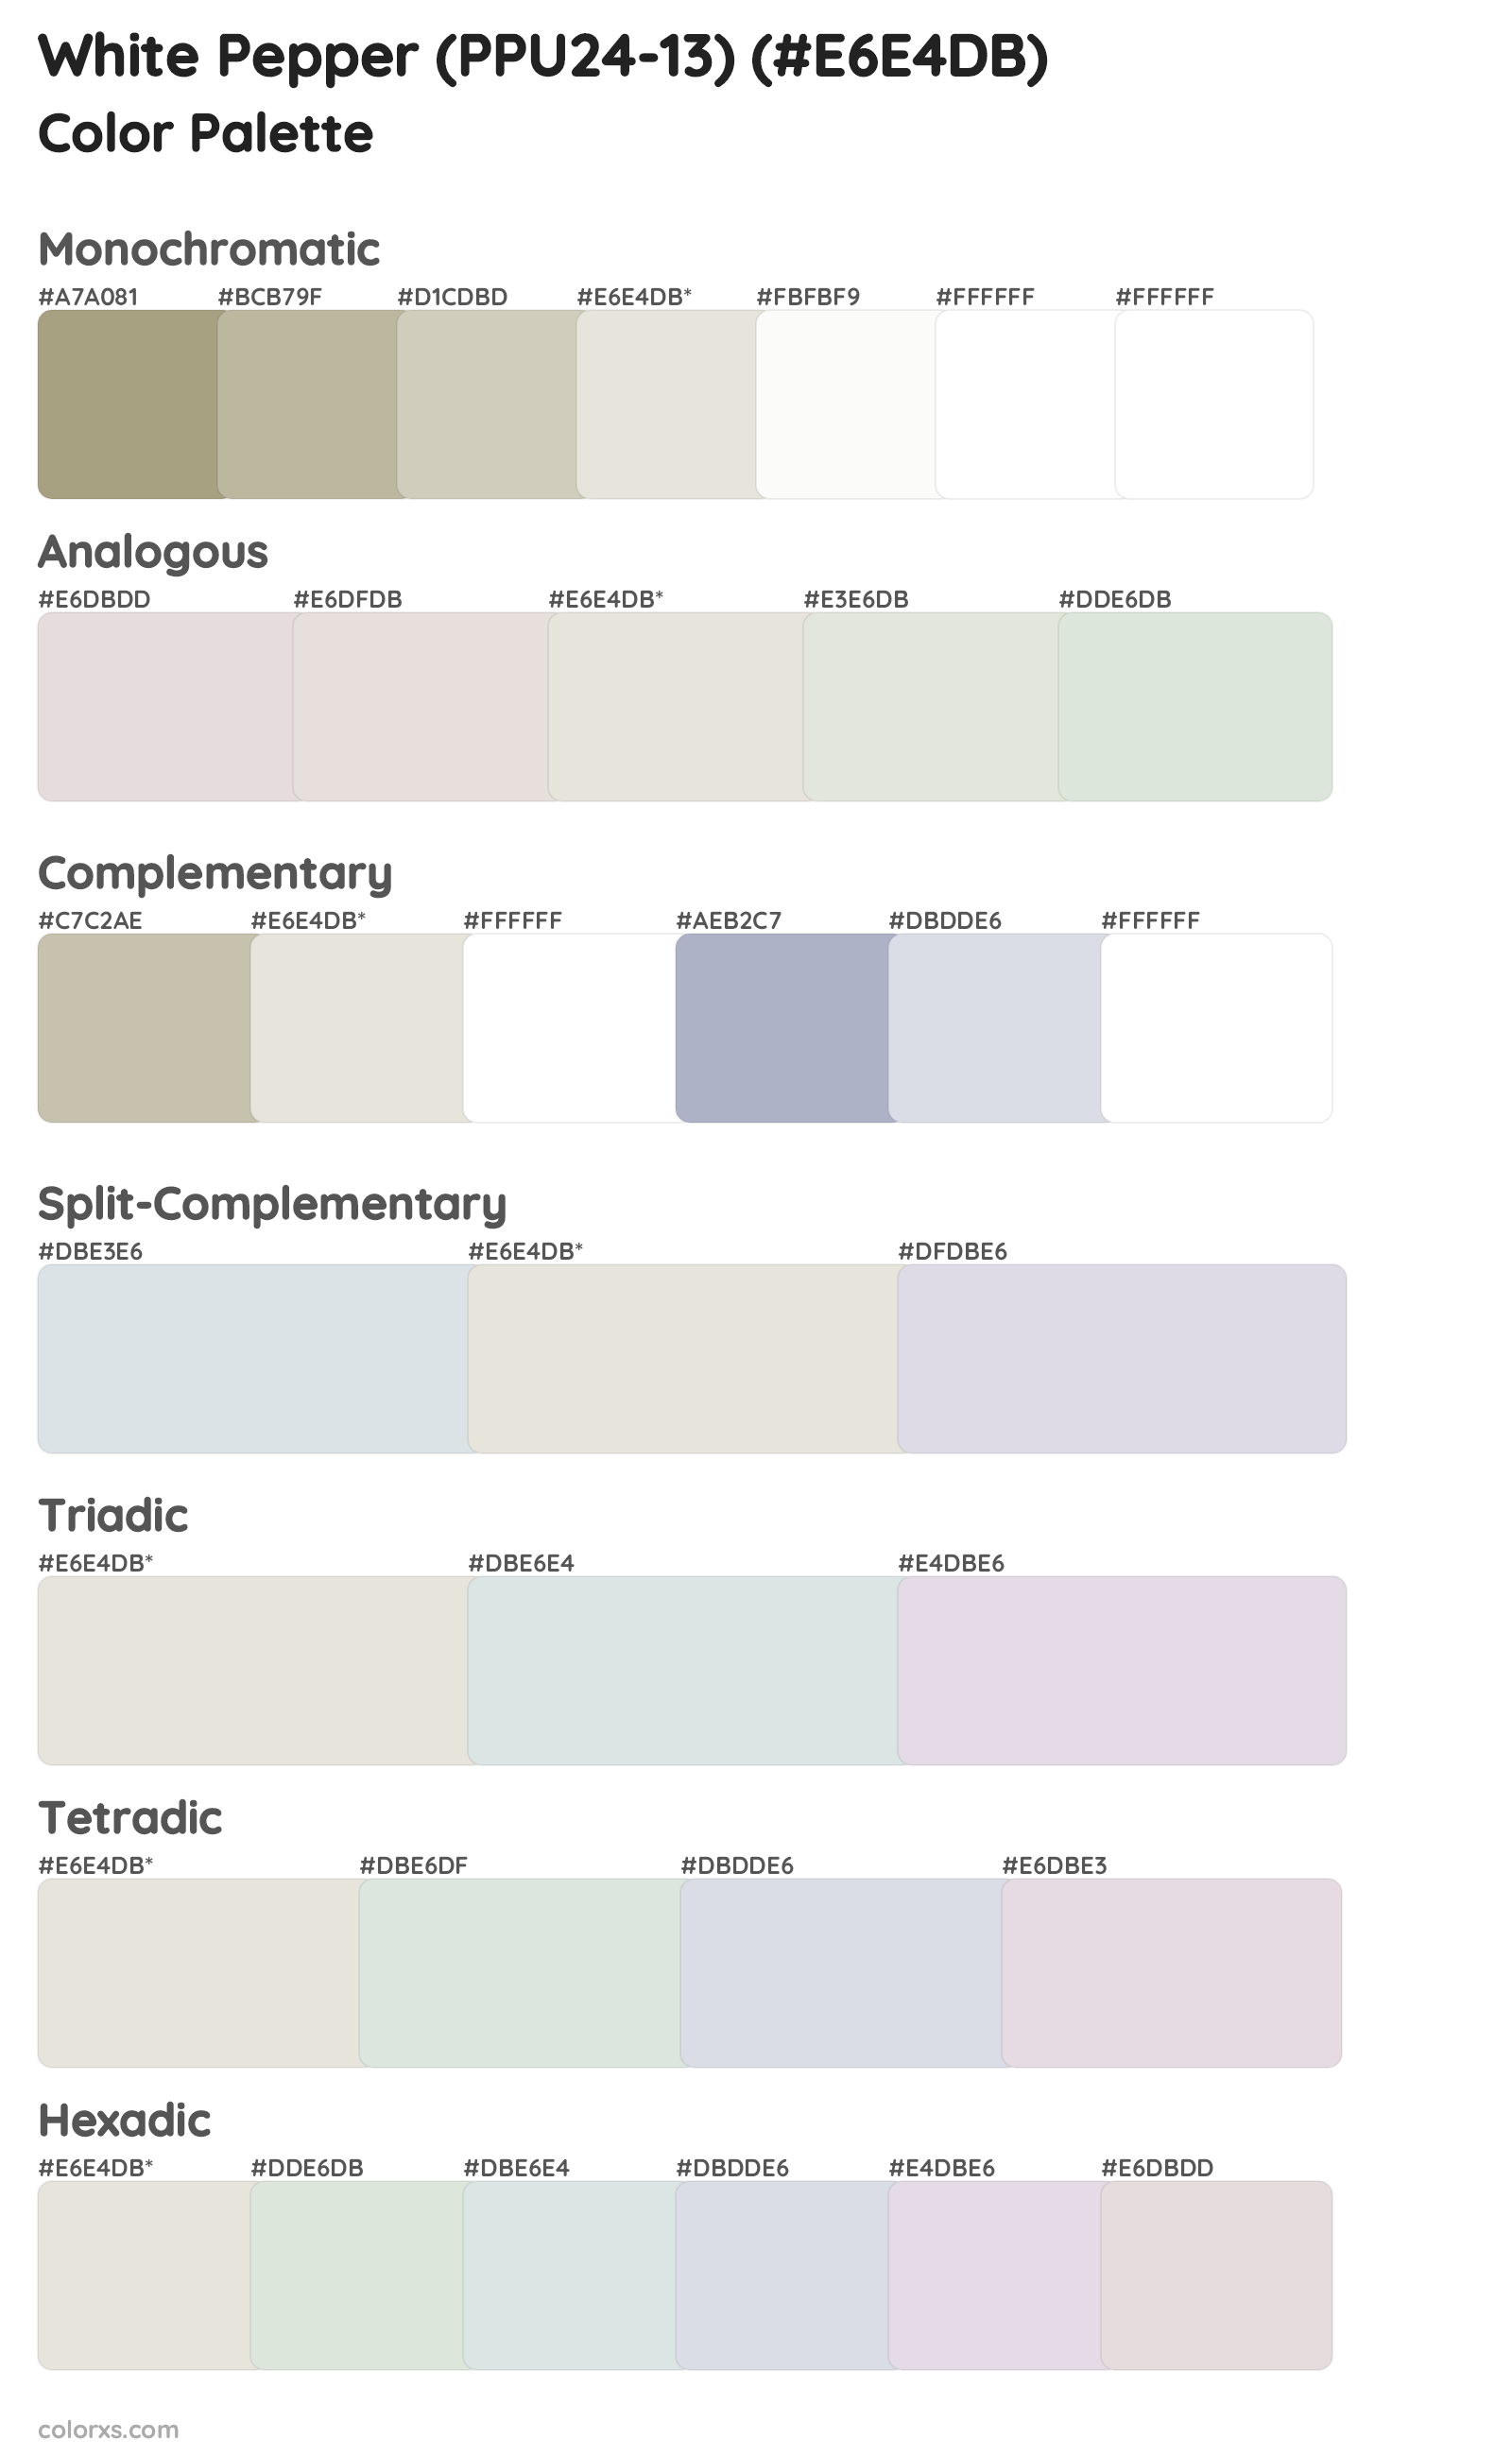 White Pepper (PPU24-13) Color Scheme Palettes